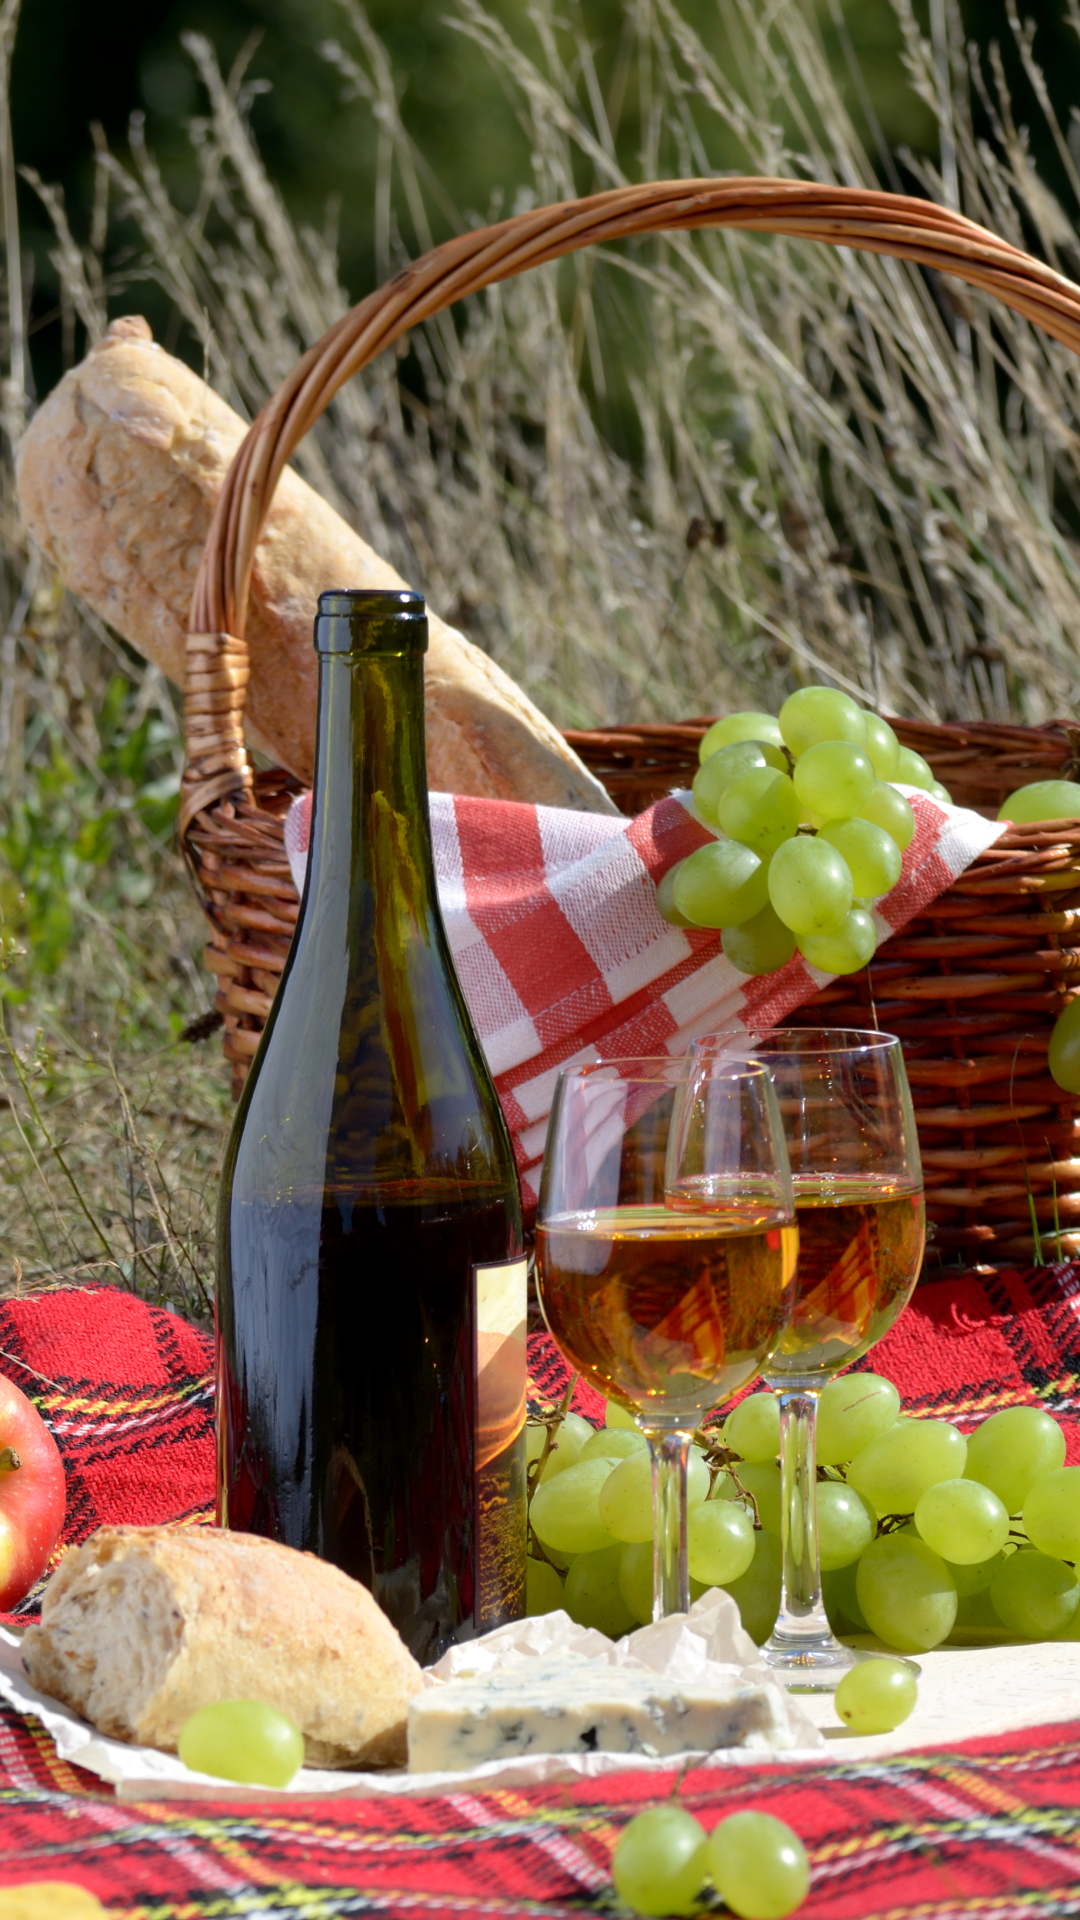 picnic, photography, bread, glass, bottle, basket, apple, wine, grapes